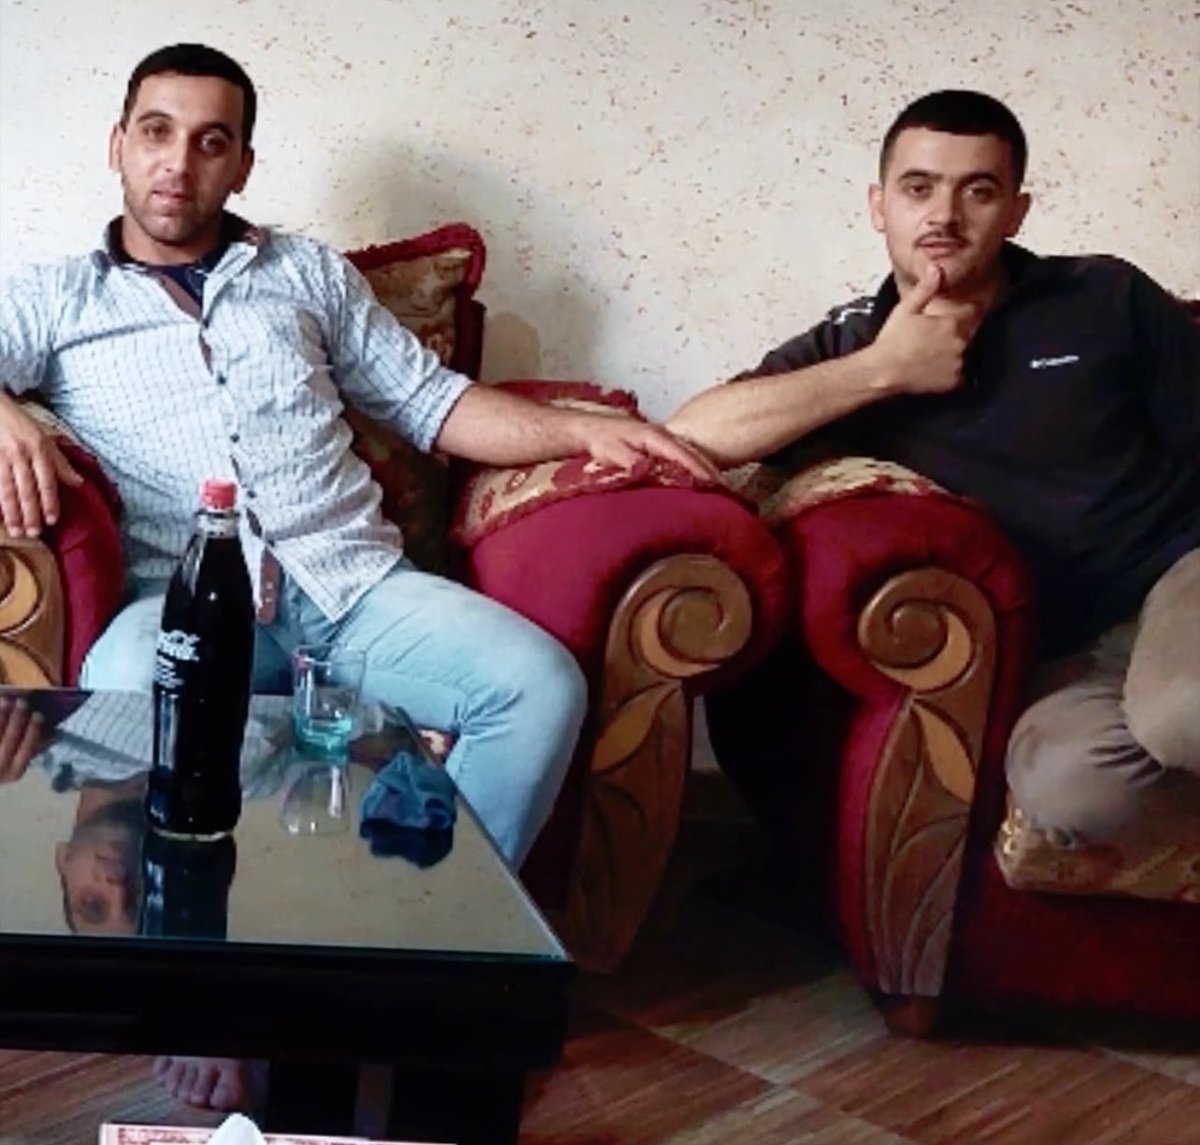 The Israeli occupation has killed my cousin Ali in Jabalia 💔